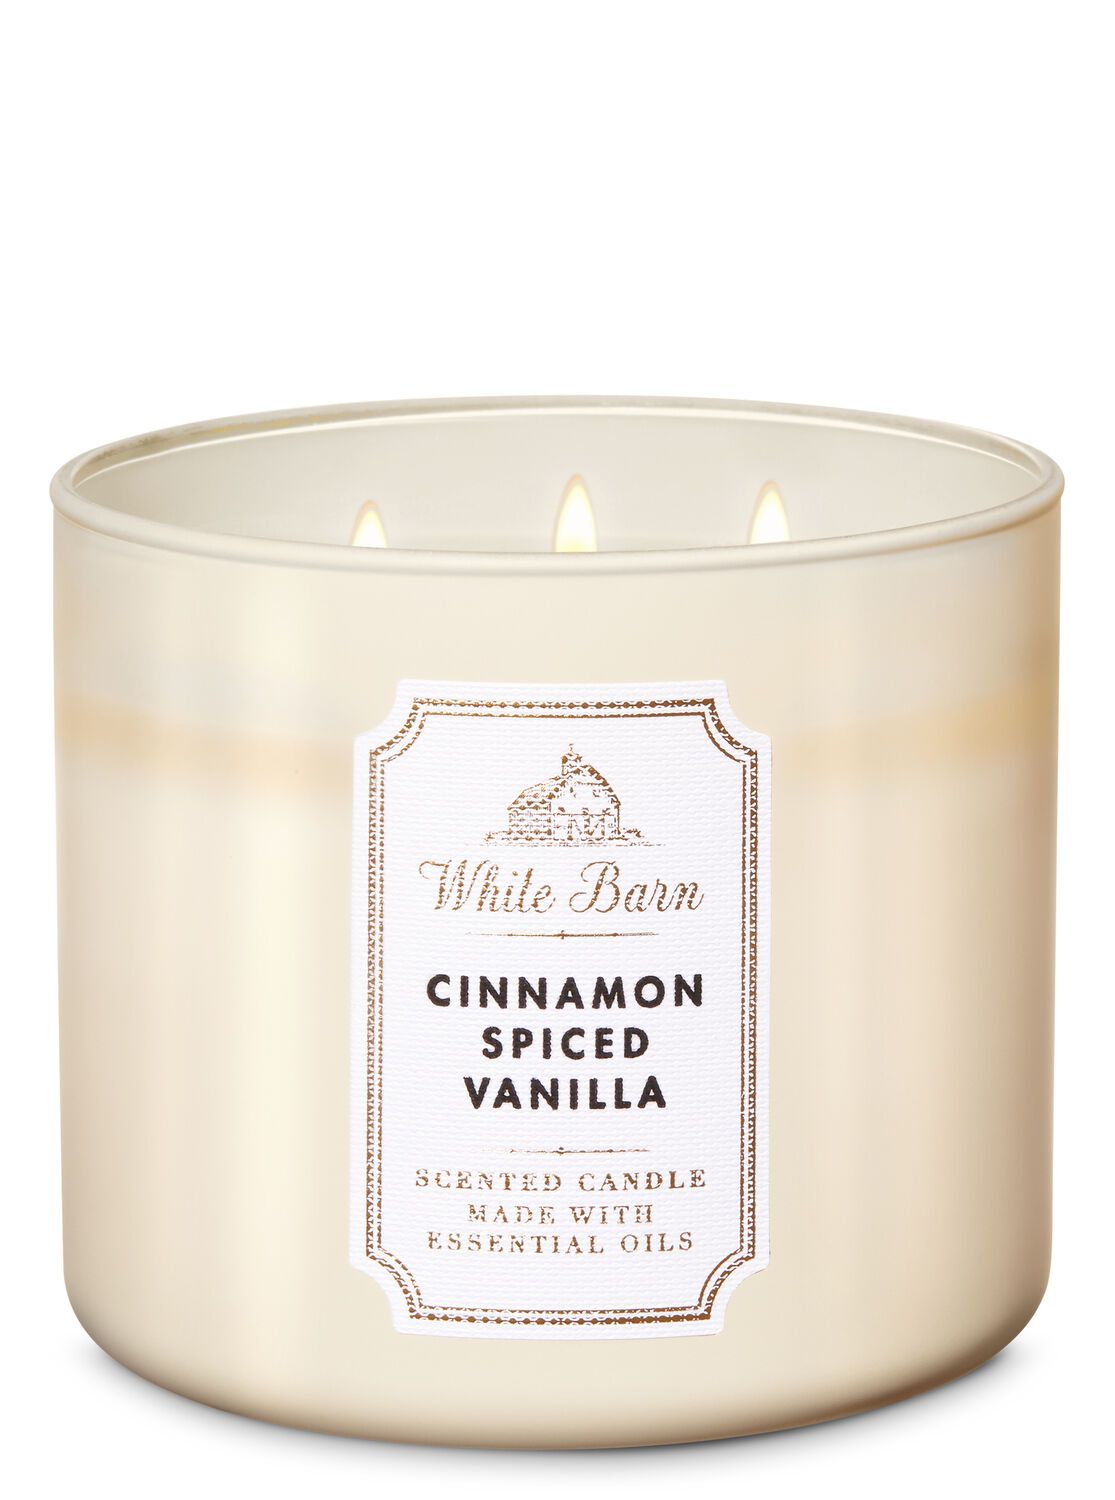 Cinnamon Spiced Vanilla 3-Wick Candle | Bath & Body Works